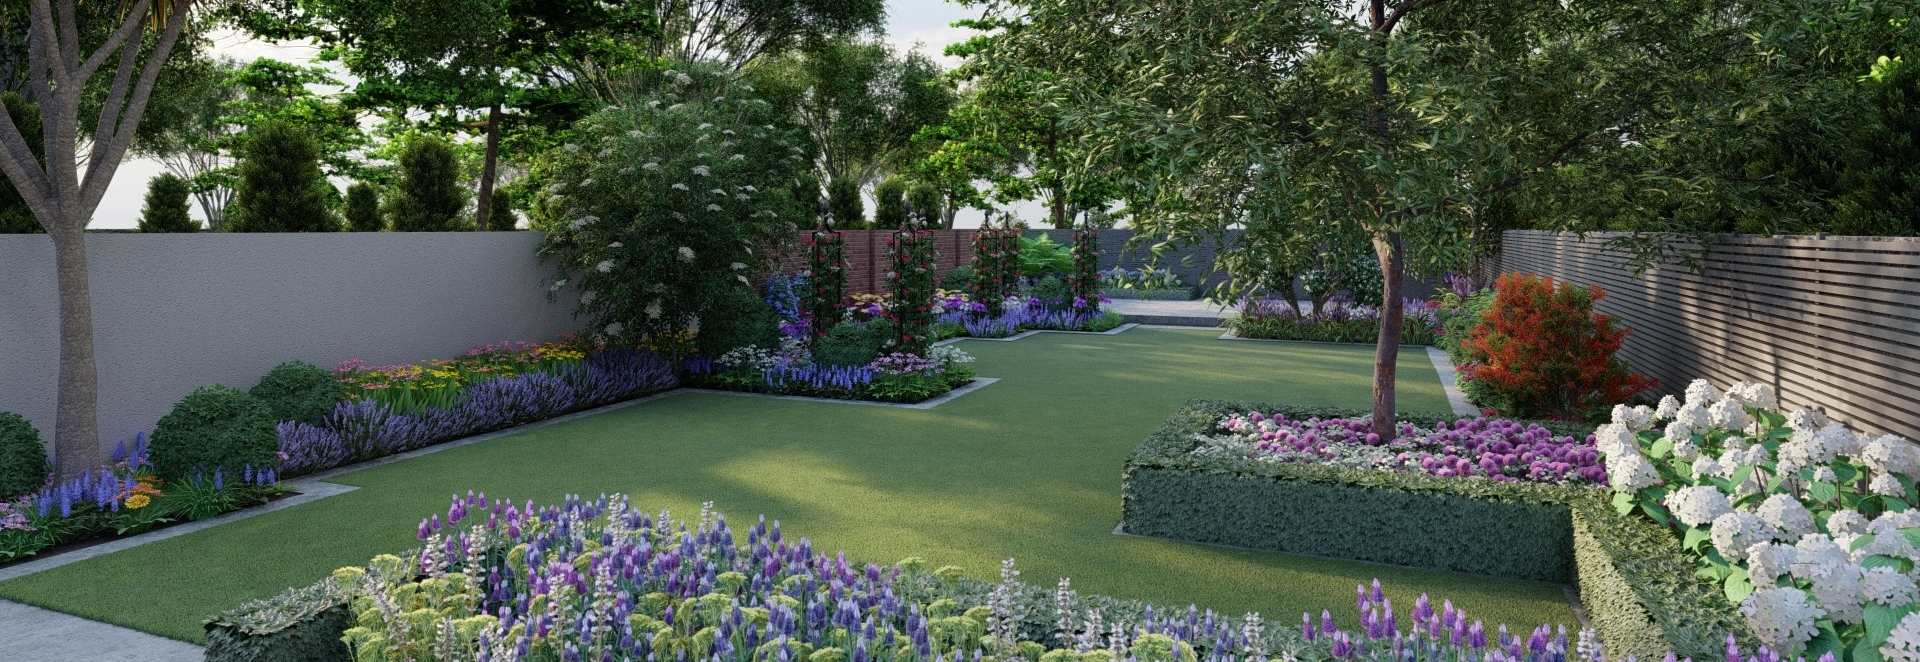 Garden Design Dublin 14 | 3D Design Visuals for large Family Garden in Dublin 14